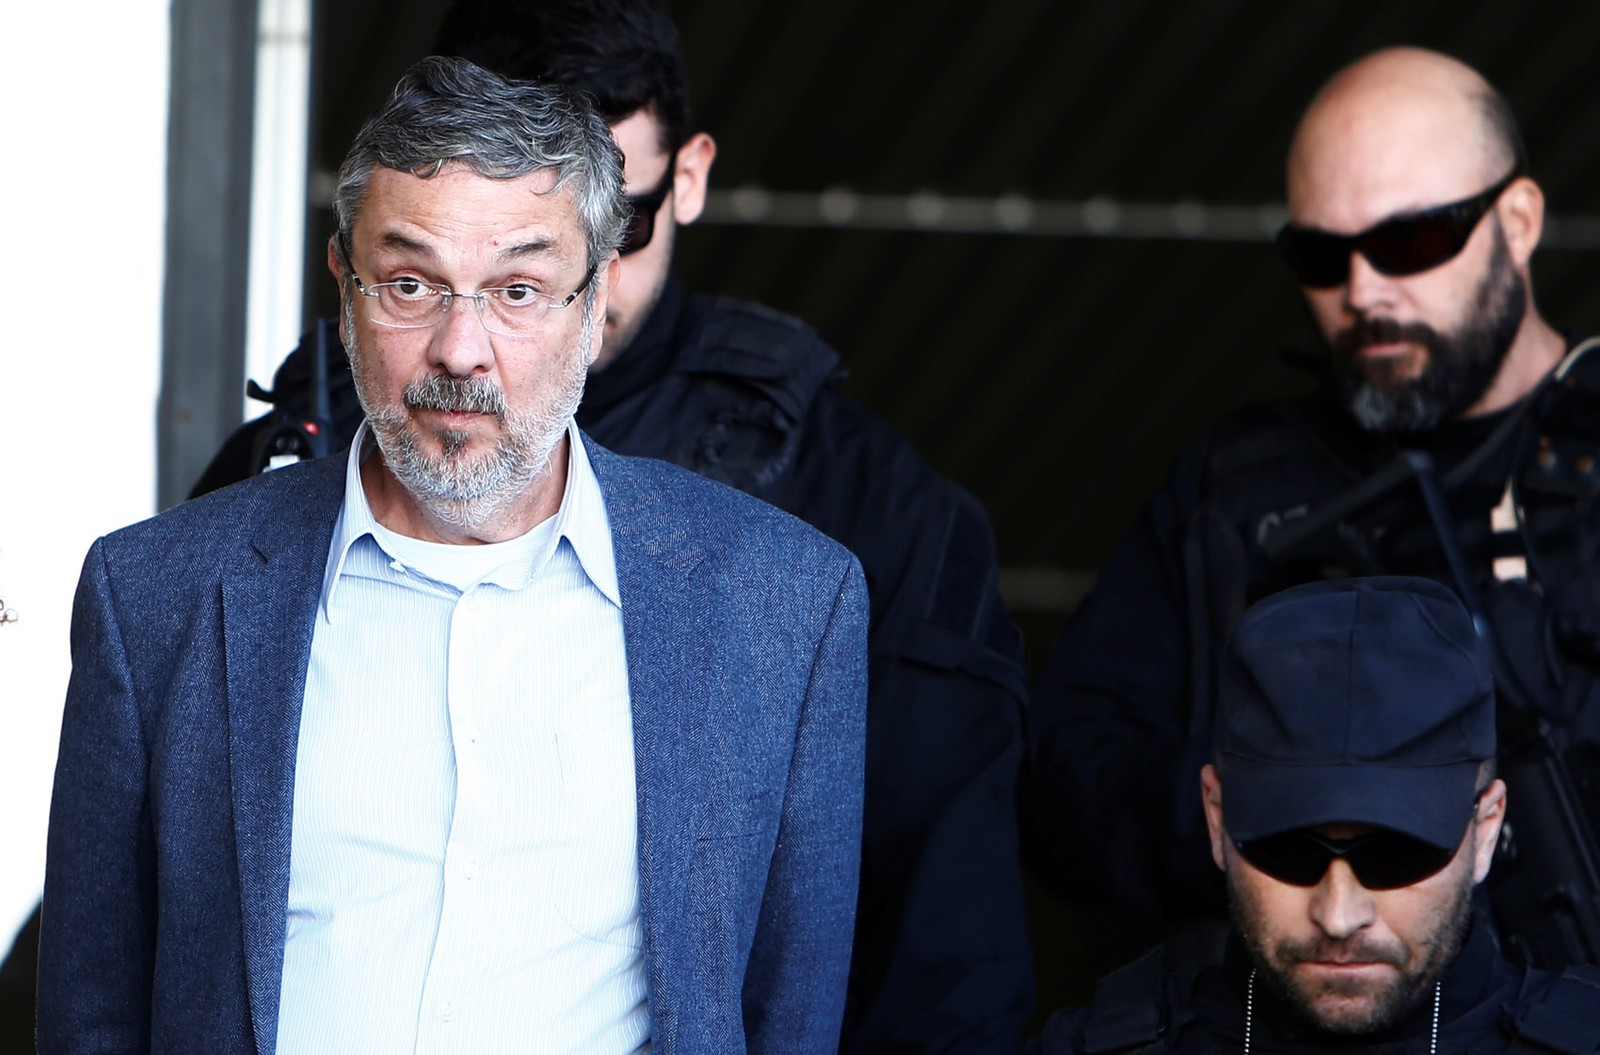 Preso desde 2016 ex-ministro Palocci é solto e vai cumprir prisão domiciliar